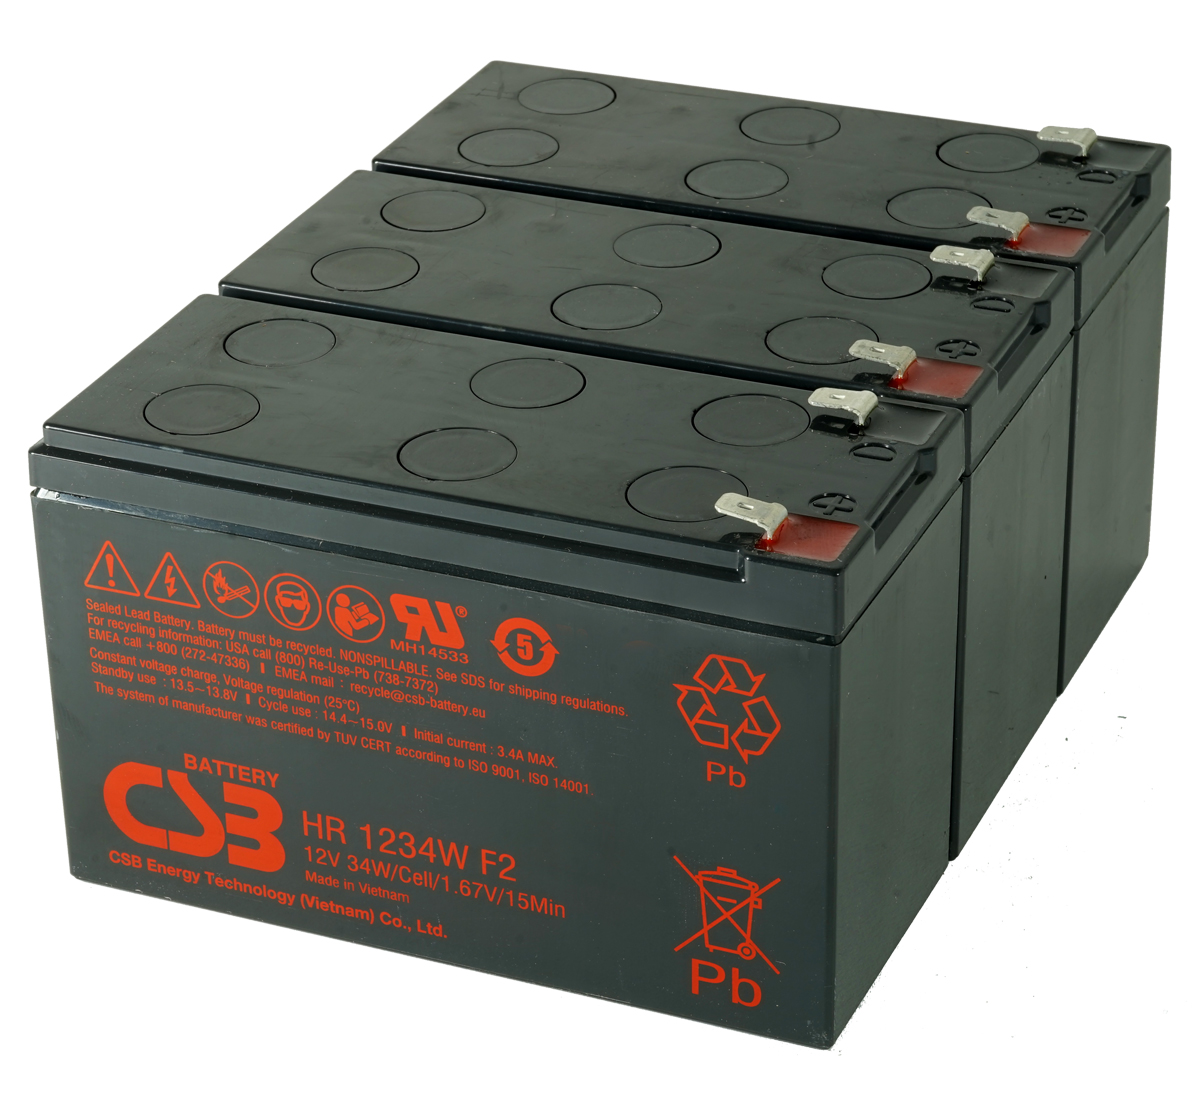 MDS68767 UPS Battery Kit for MGE / Eaton UPS